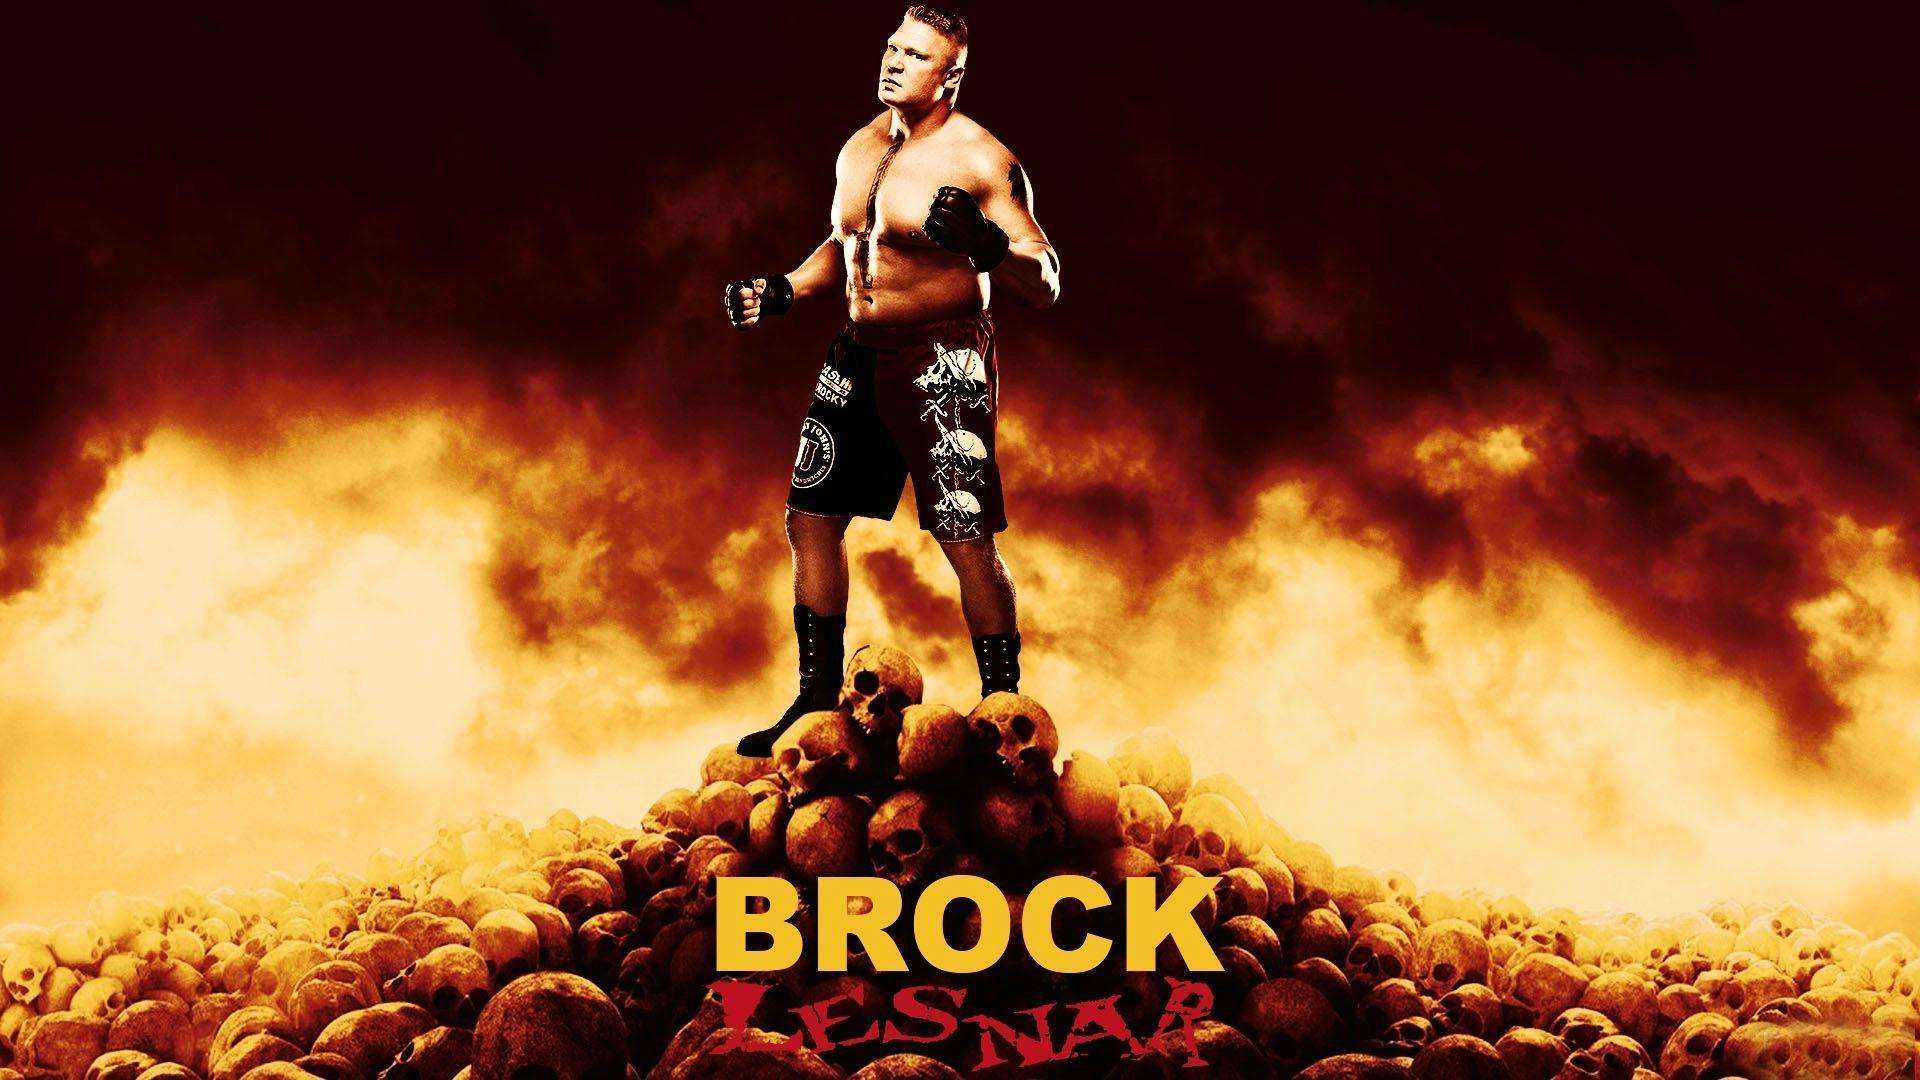 Brock Lesnar Picture. Image